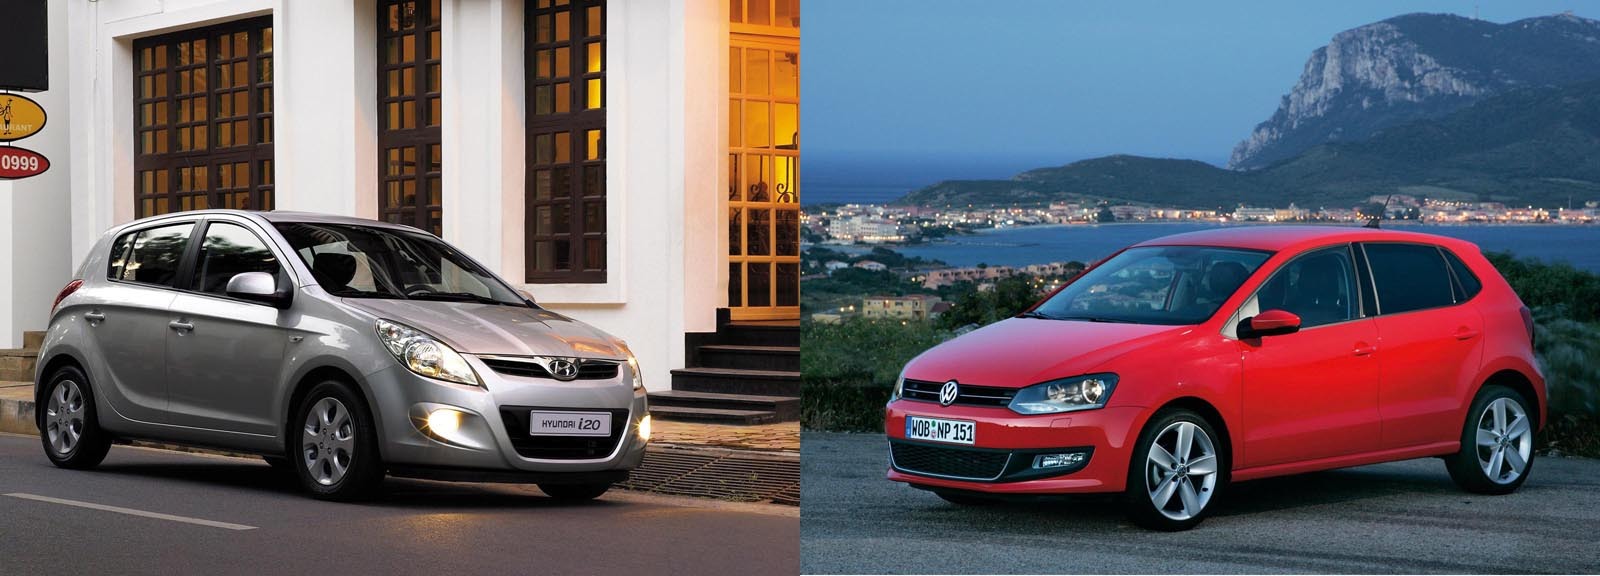 Hyundai i20 vs. Volkswagen Polo: 2 - 2. Ambele modele au multe avantaje.